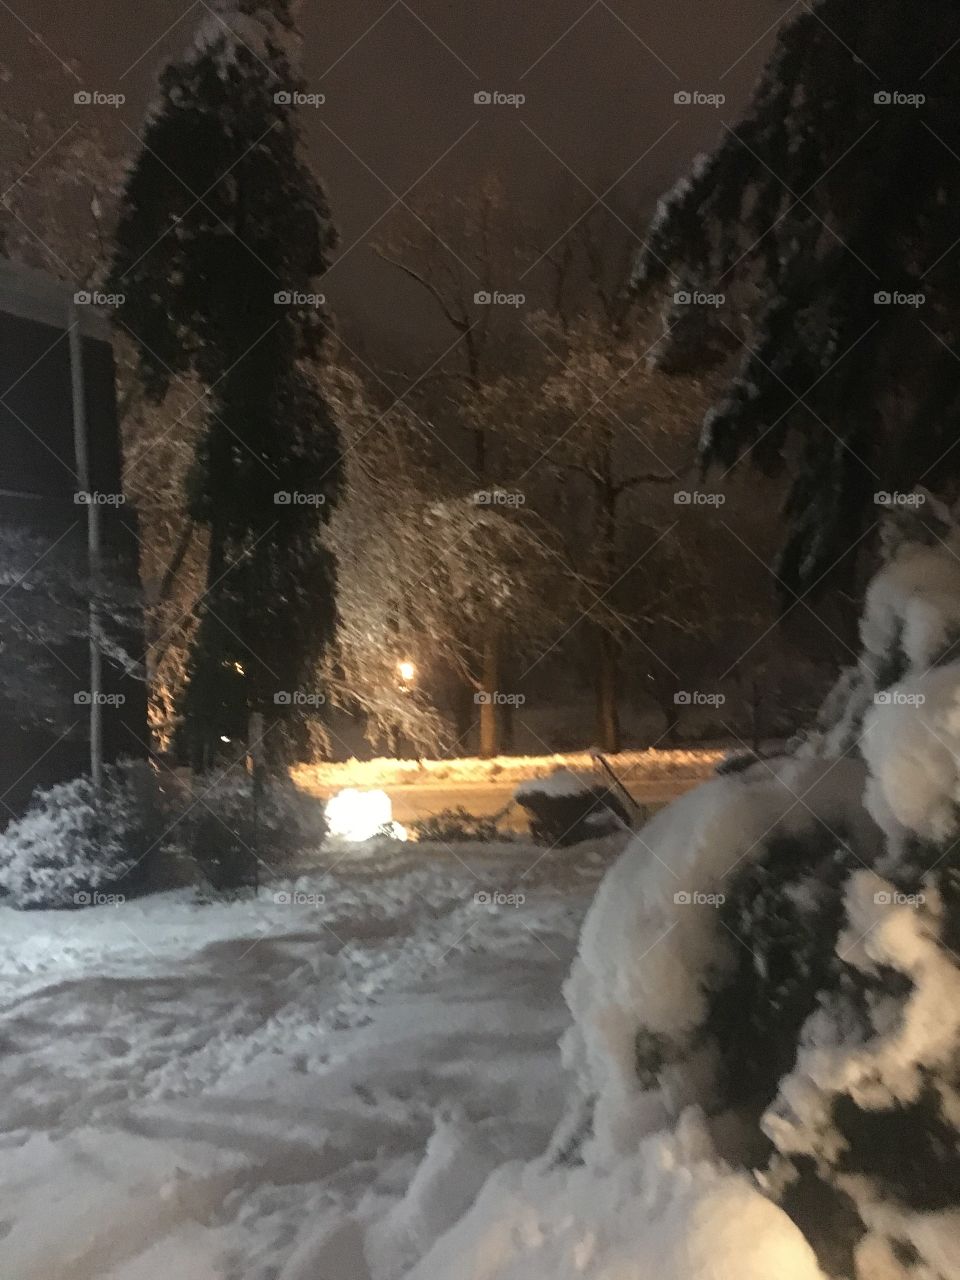 Winter Wonderland - Frozen Trees in the South Orange NJ Snow globe